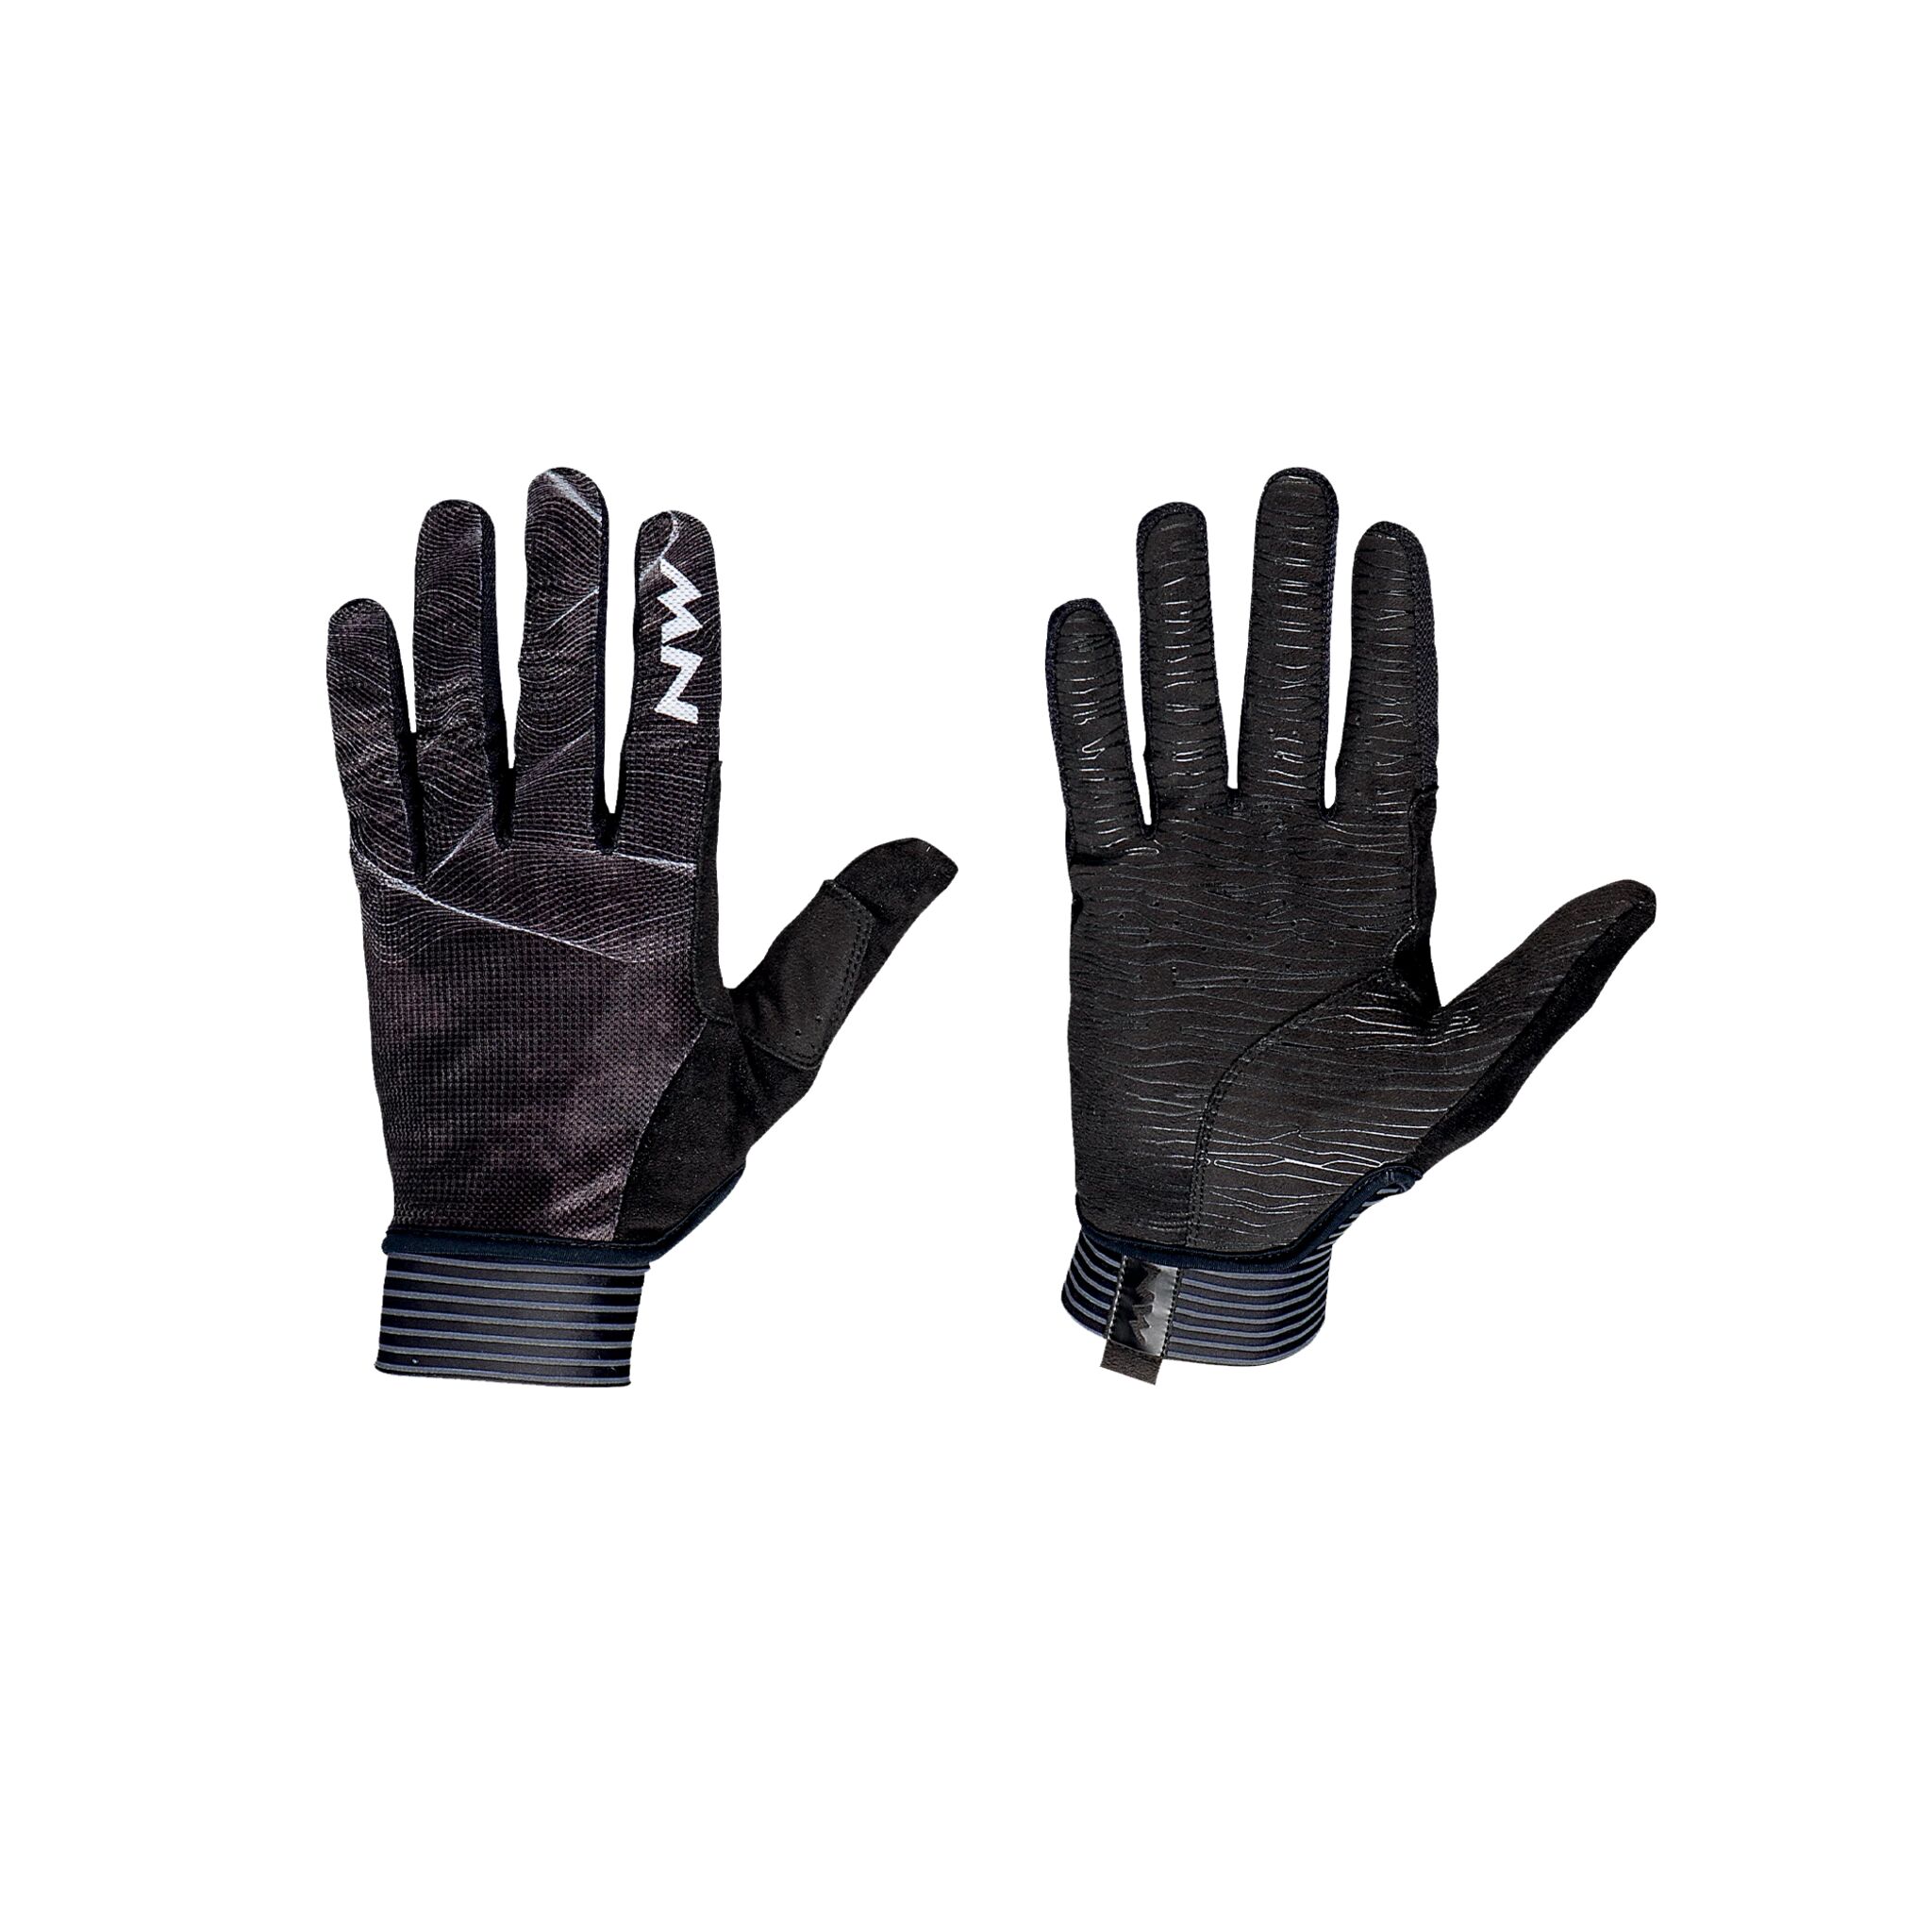 Northwave Active Full Finger 21, sykkelhanske, unisex XL black / grey